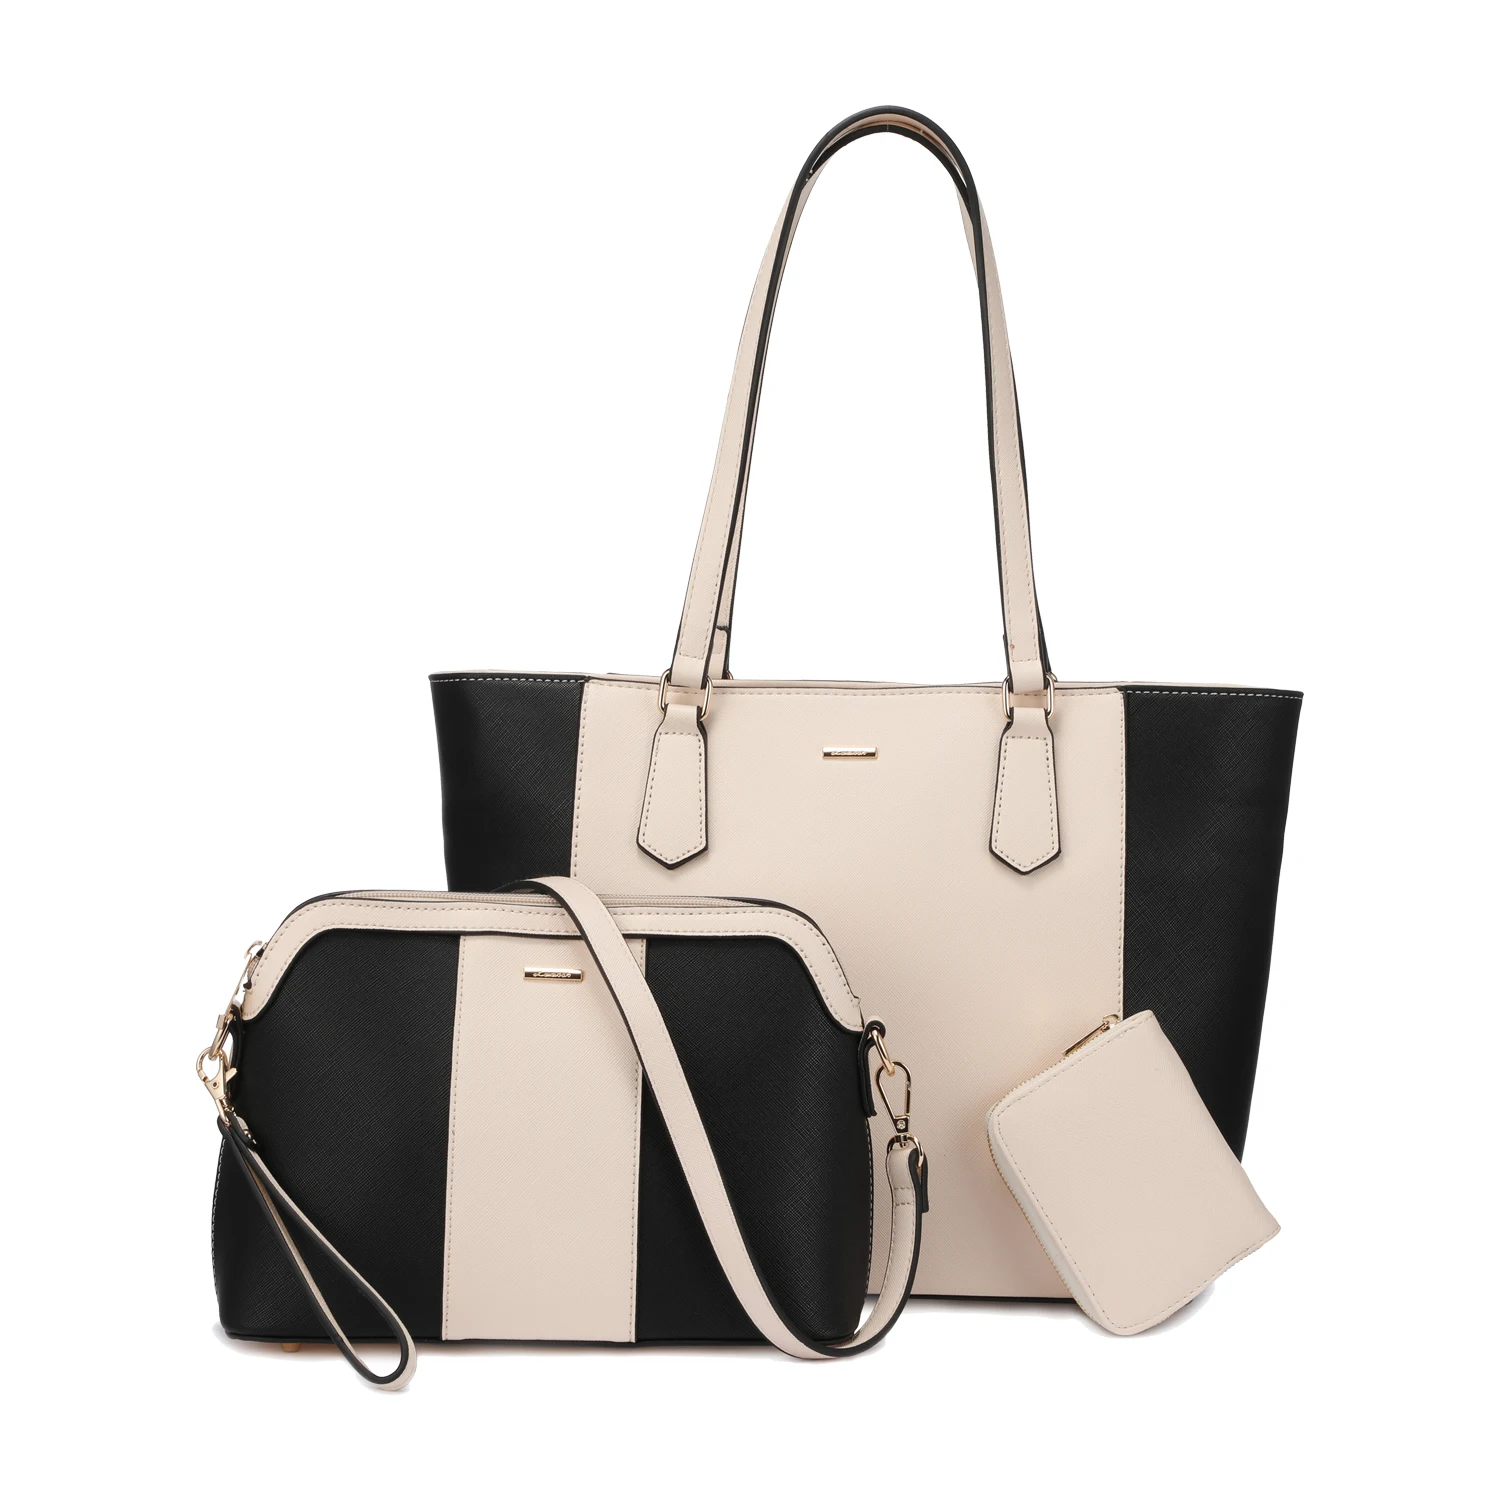 

BRAND LOVEVOOK 2020 NEW HOT SALE fashion pu leather three-piece tote handbags Delicate design handbags for women, Customizable